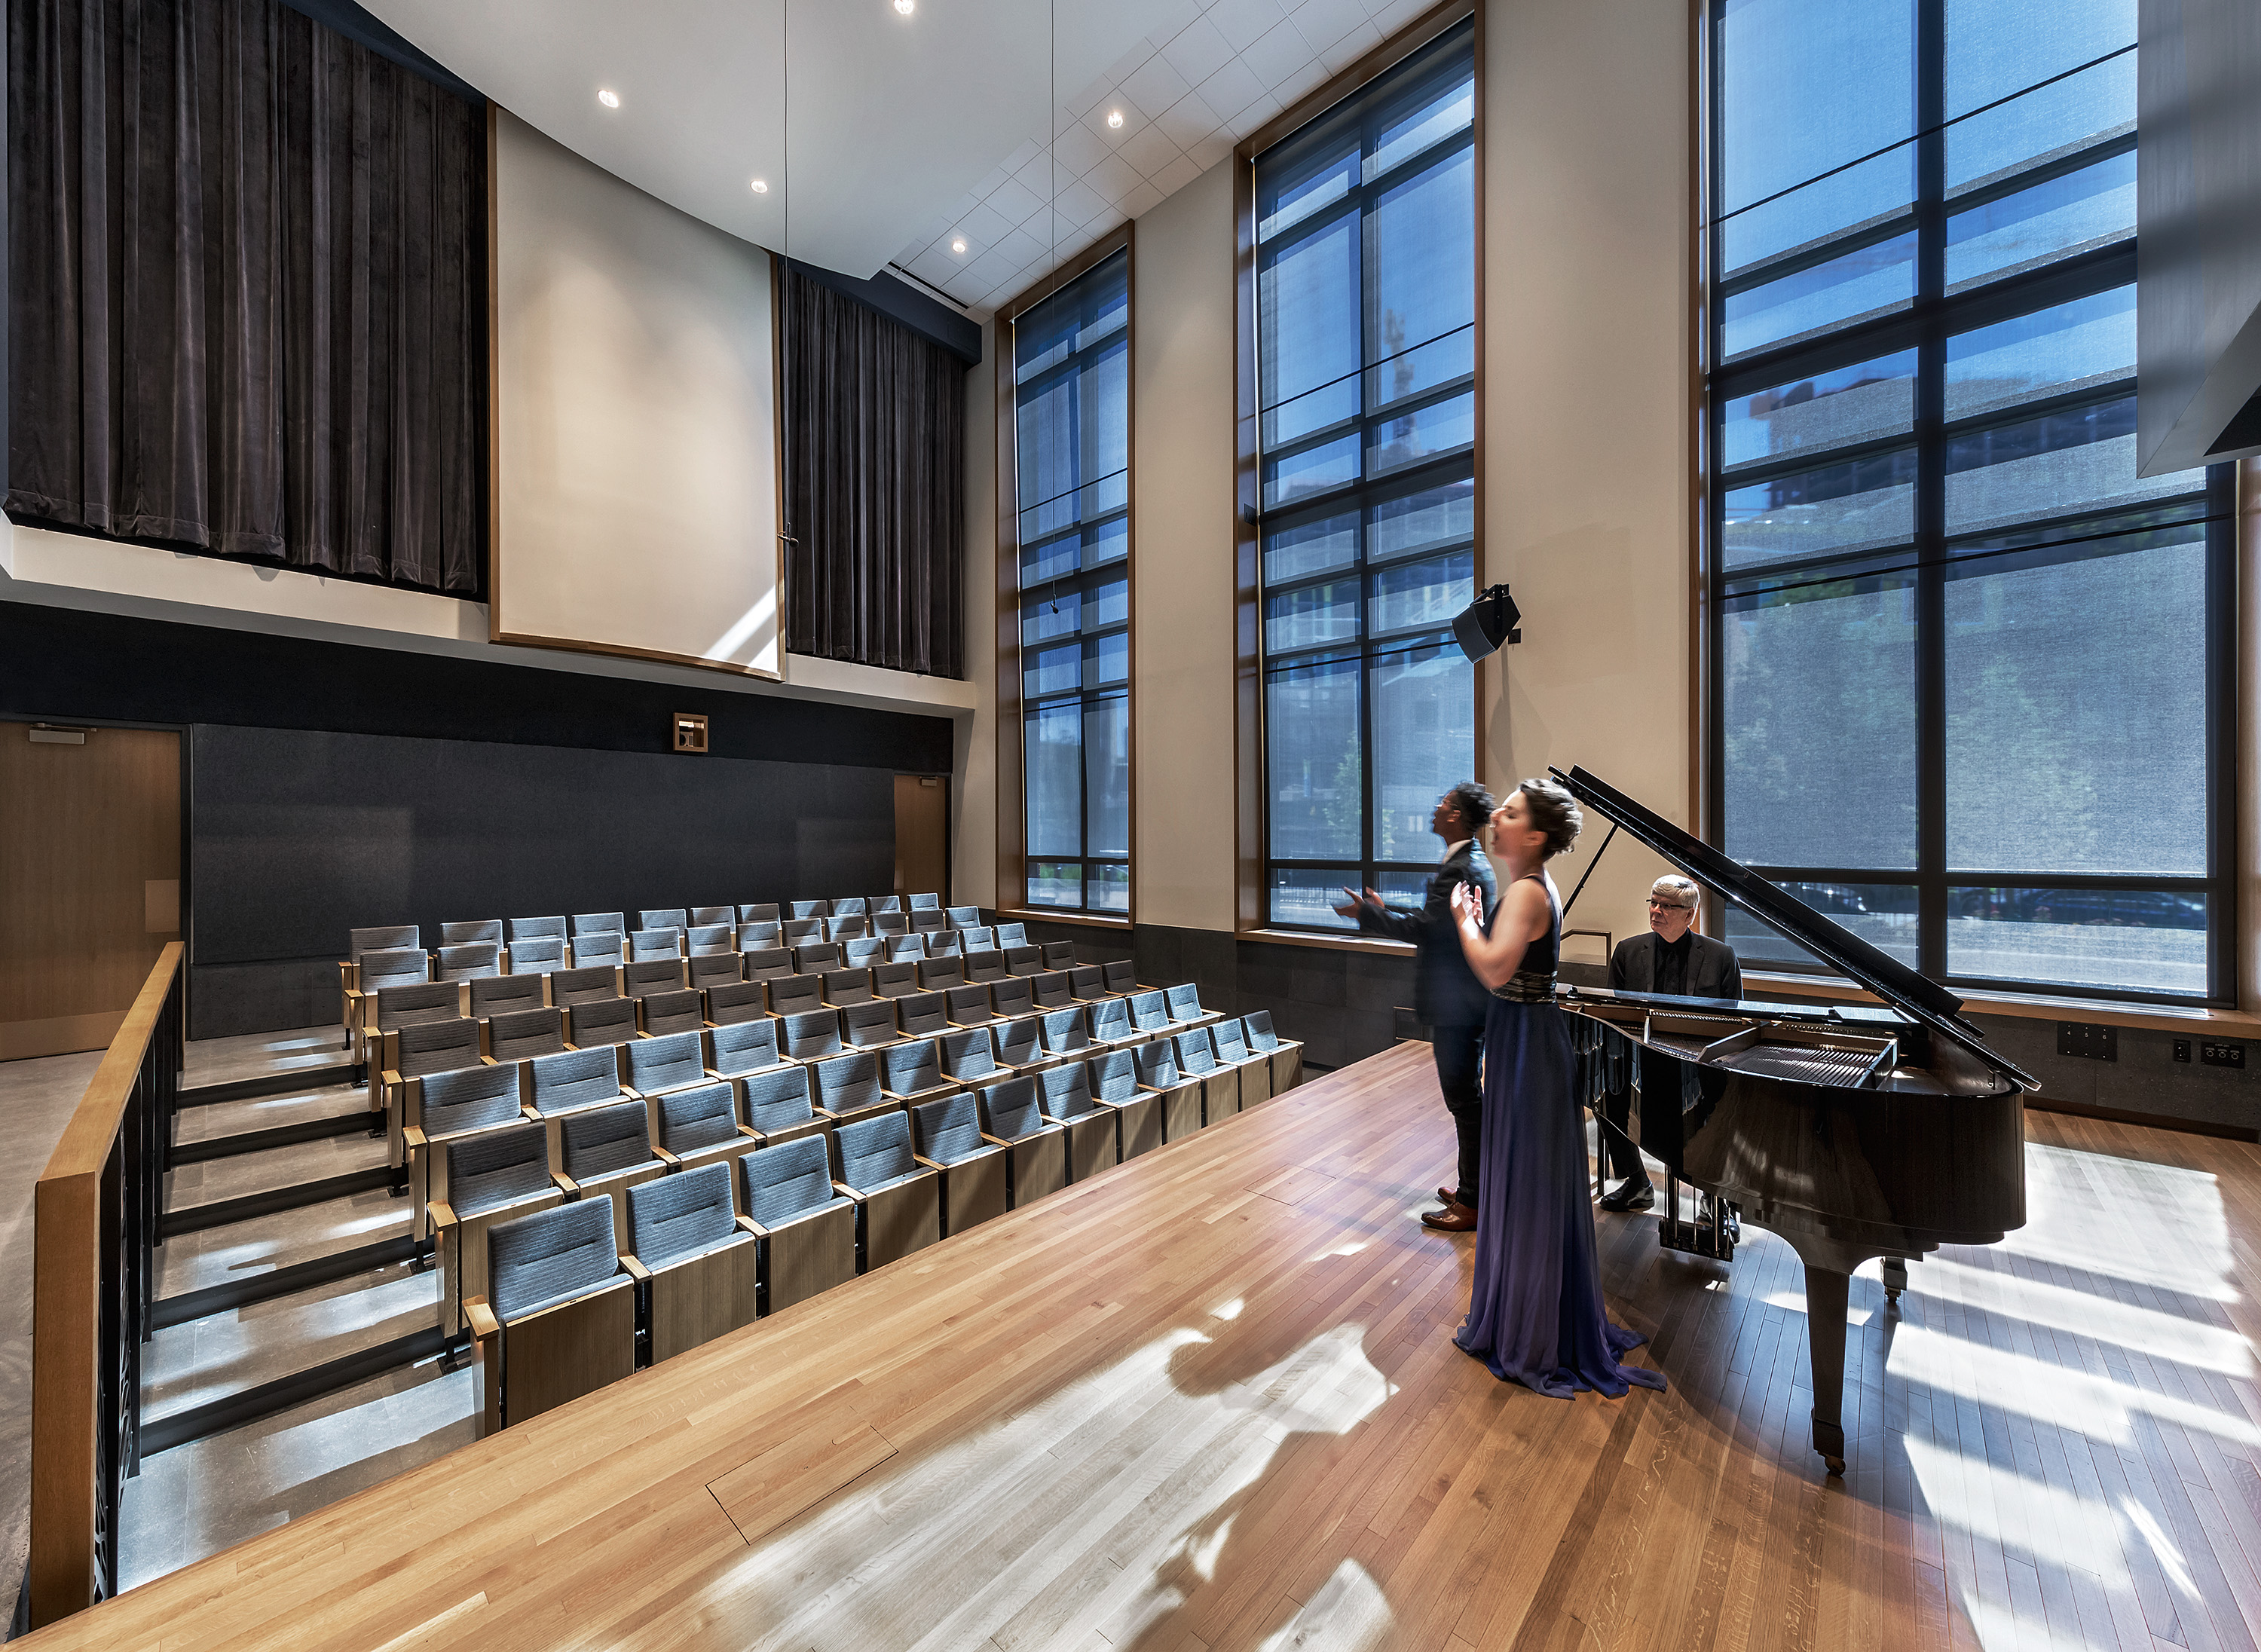 The 80-seat Brennan Family Recital Hall inside the DePaul University School of Music Holtschneider Performance Center. 